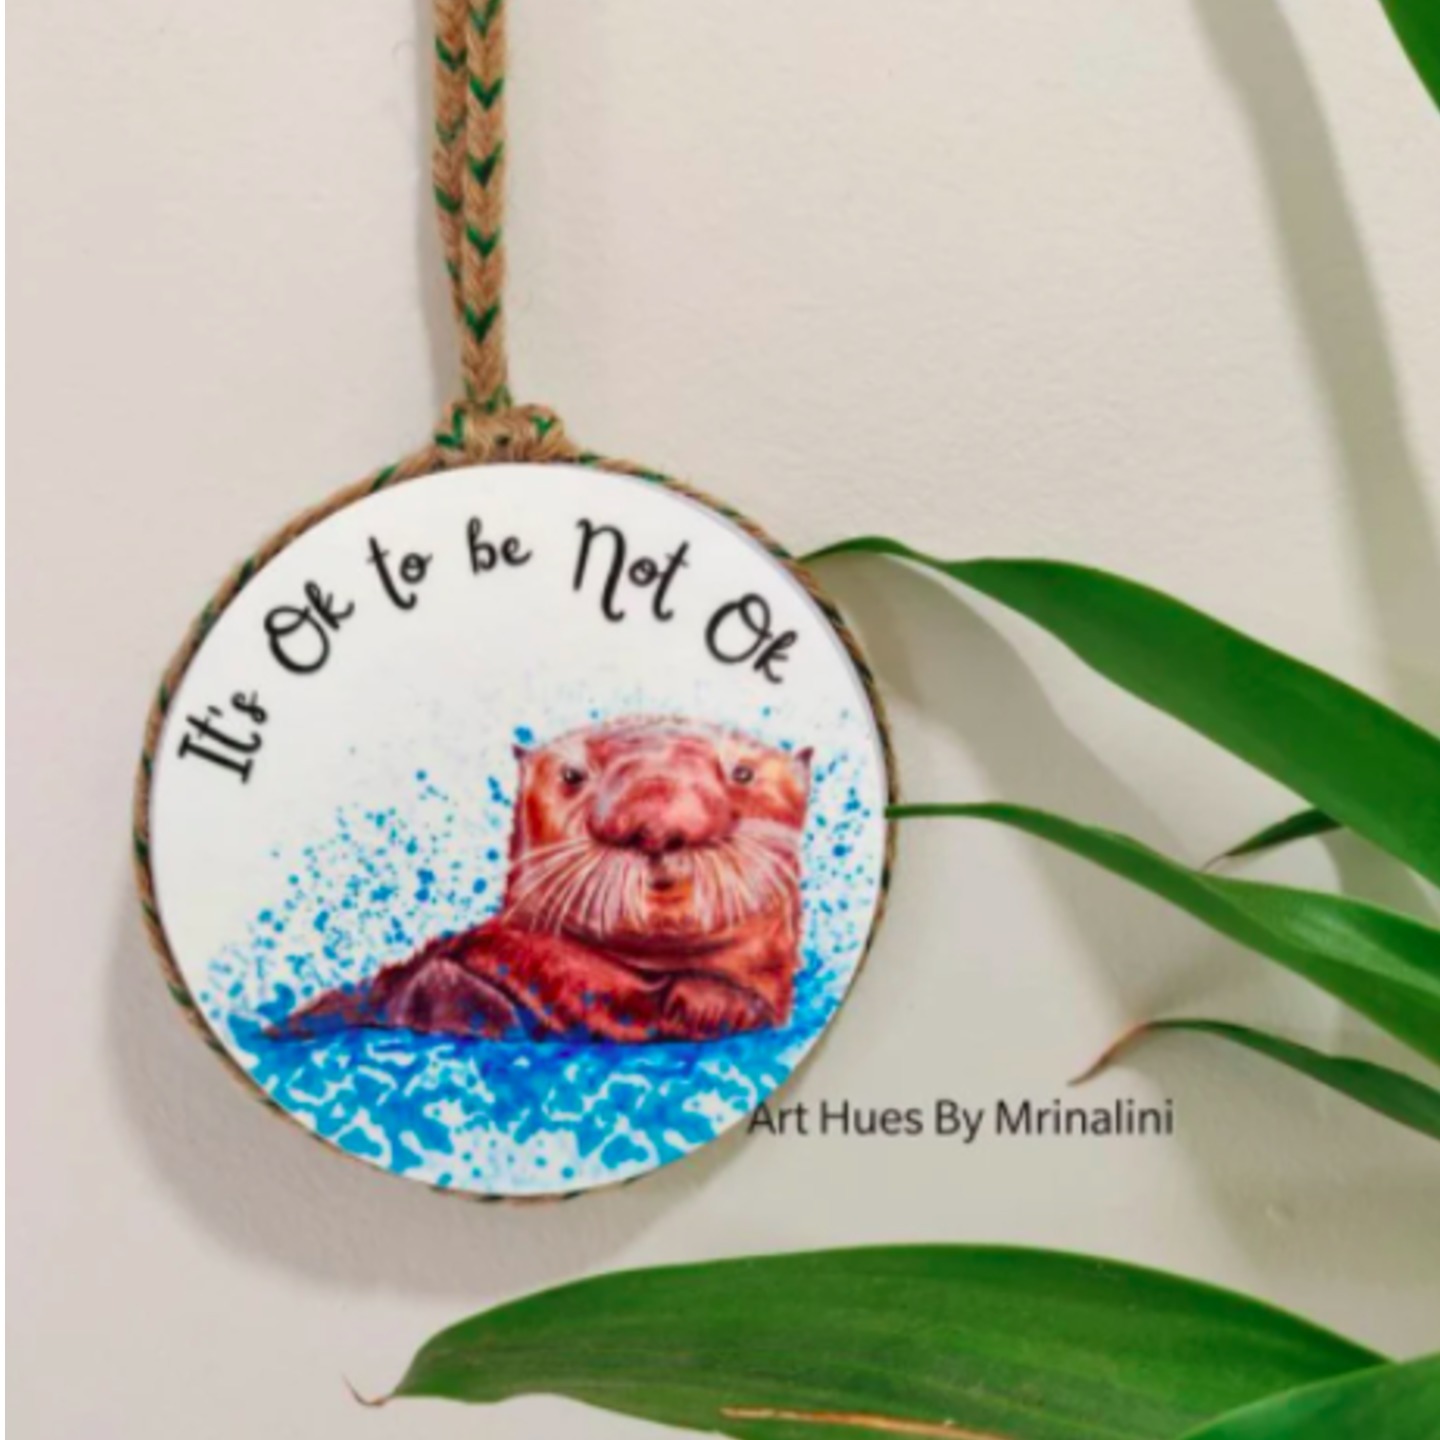 Sea Otter artwork motivational & inspiring gifts